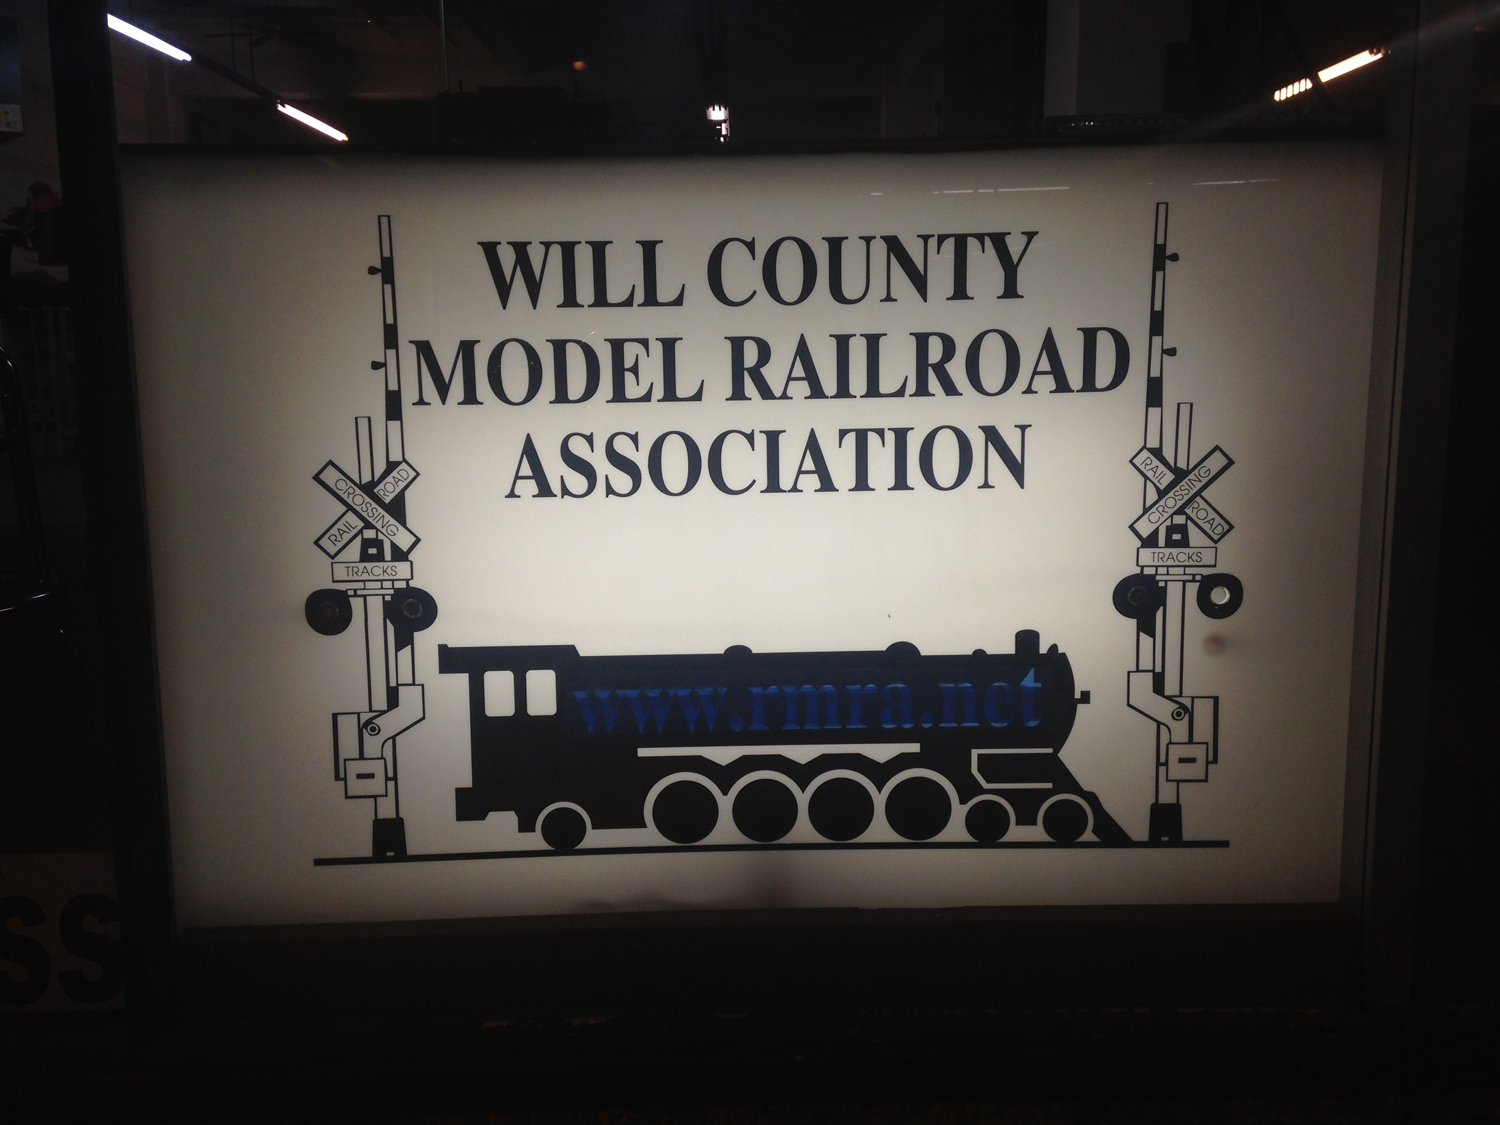  County Model Railroad Association (WCMRRA) Small Model Railroads